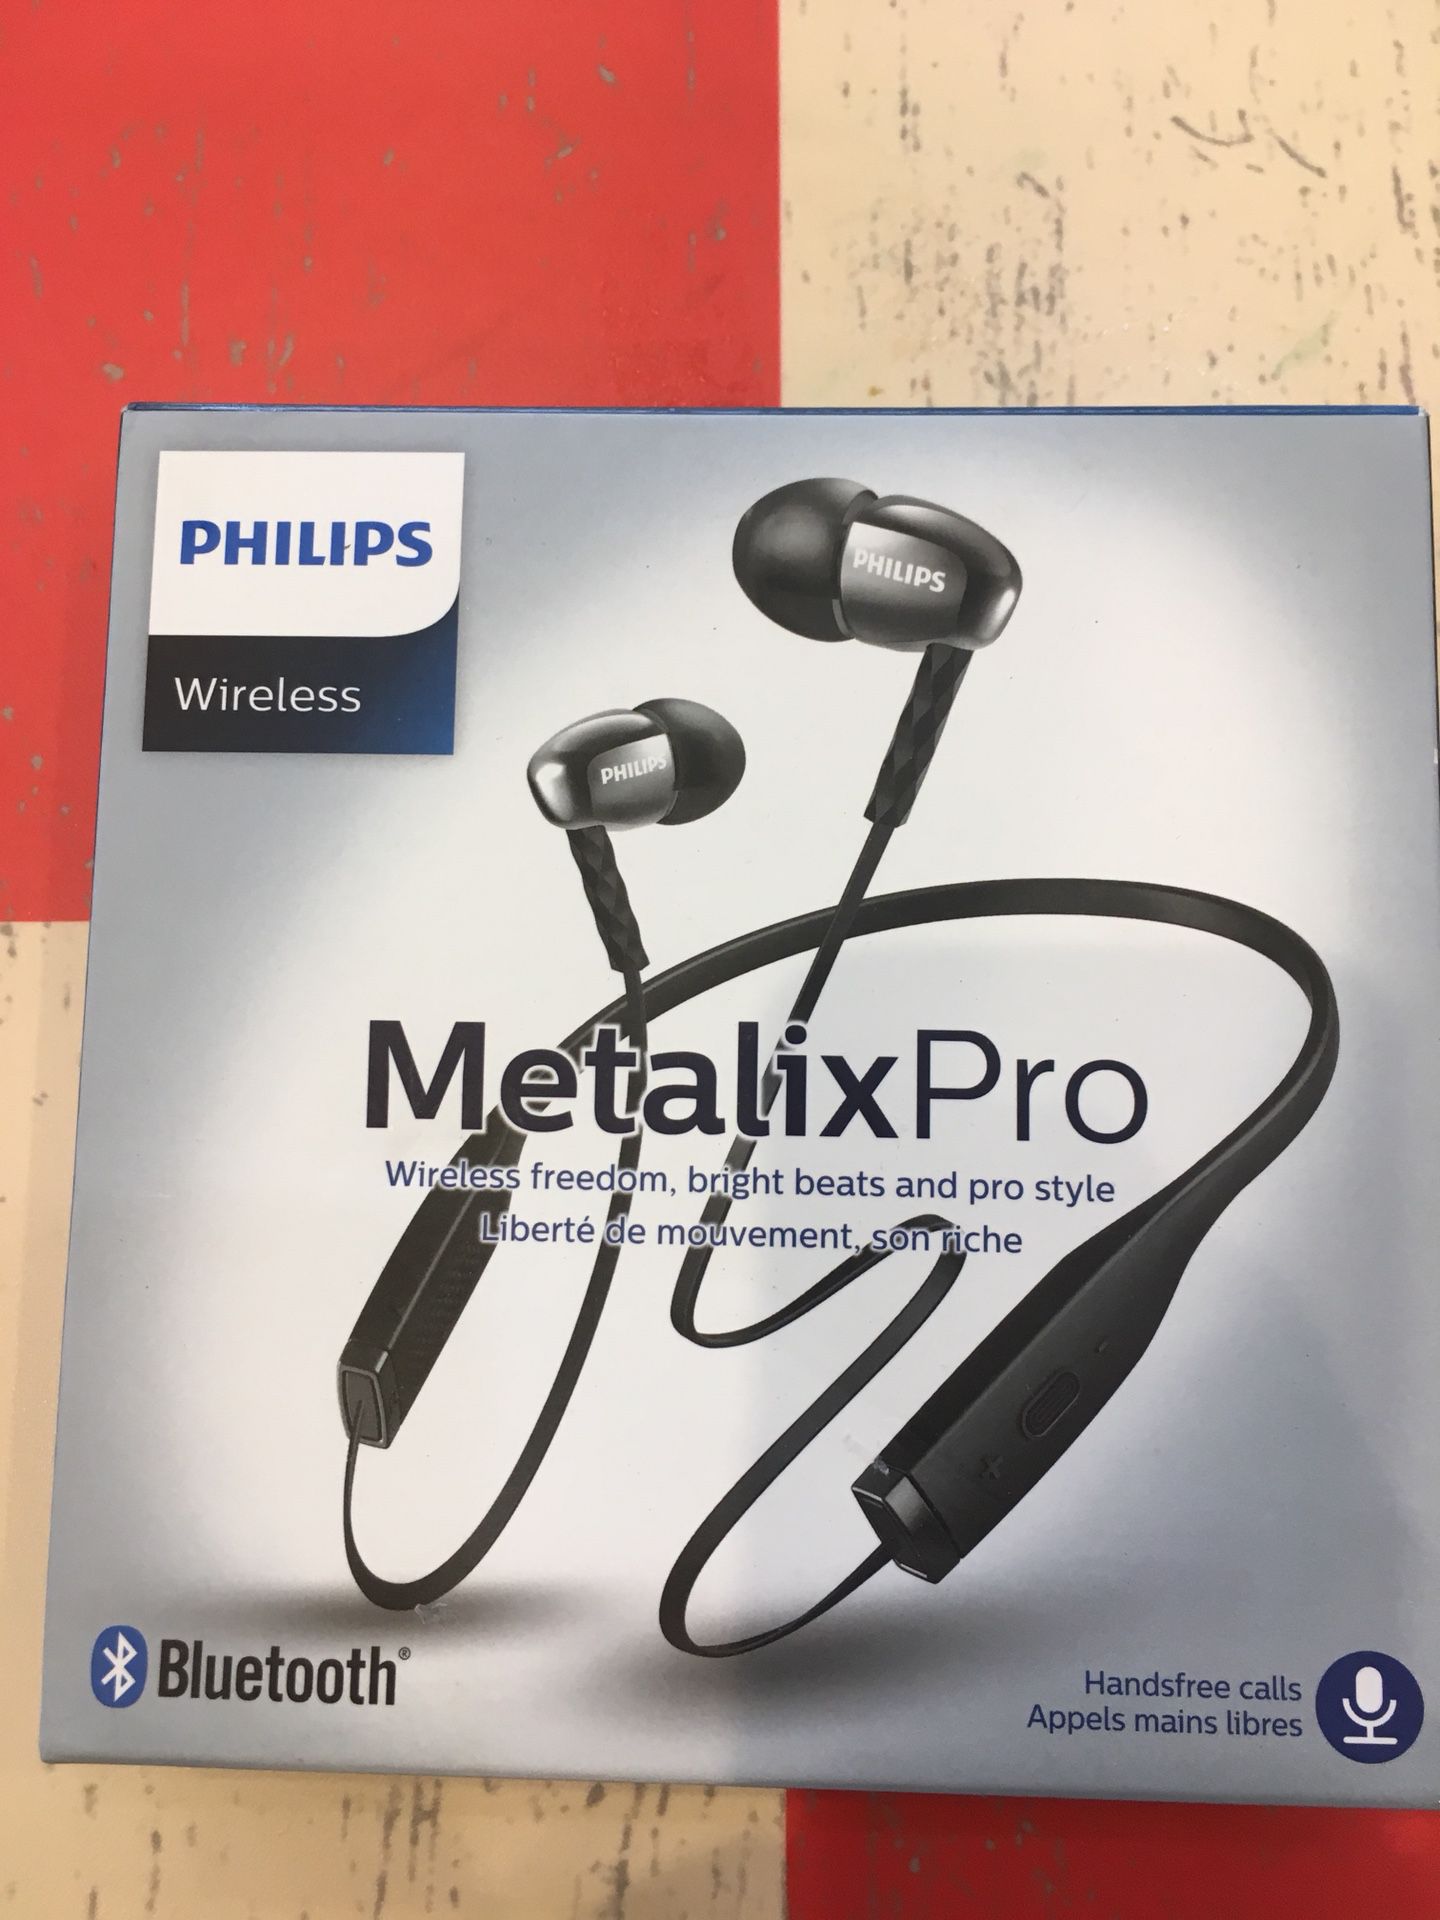 Philips SHB 5950 Metalix Pro Bluetooth in ear headphones.- for Sale in FL - OfferUp